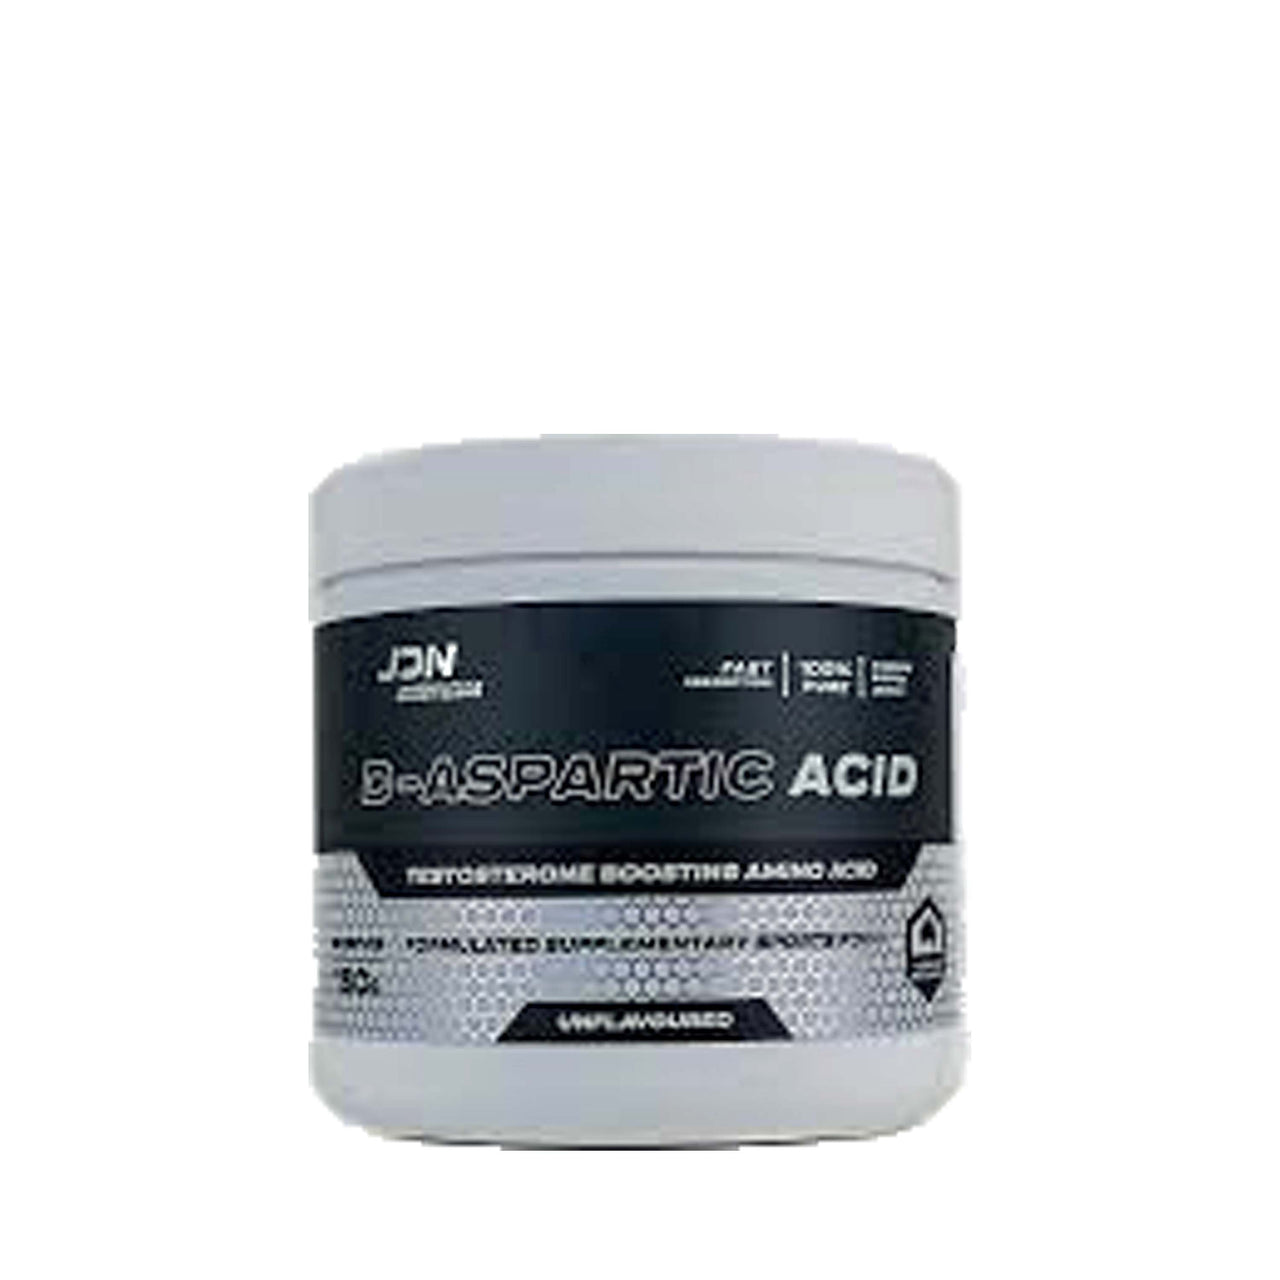 JDN D Aspartic Acid, JD Nutraceuticals - Nutrition Co Australia